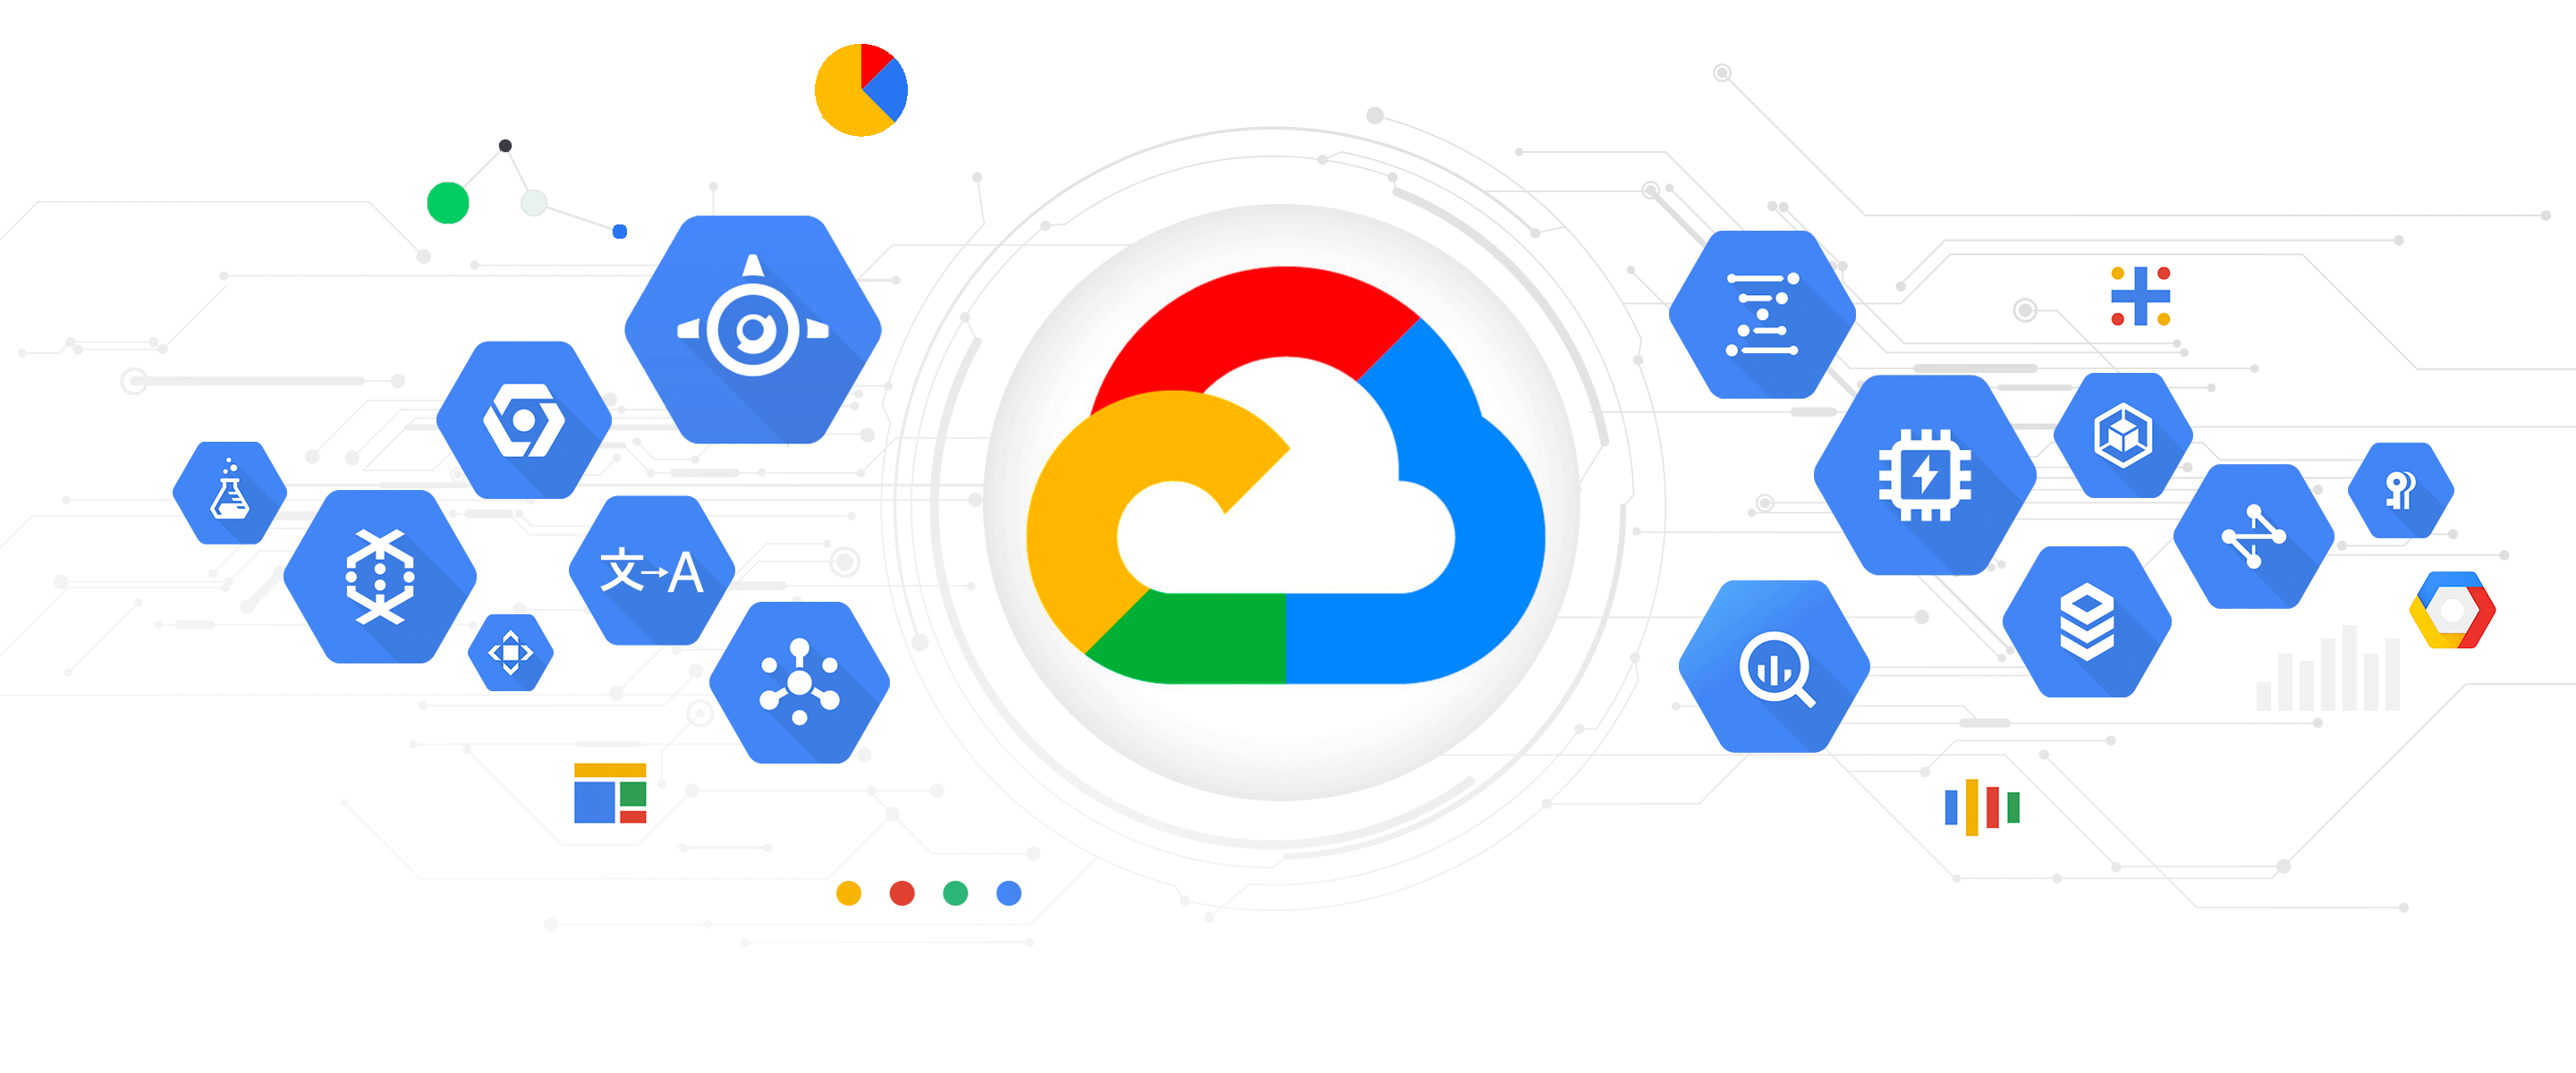 Citynavigator Open Data Platform verhuisd naar Google Cloud Platform